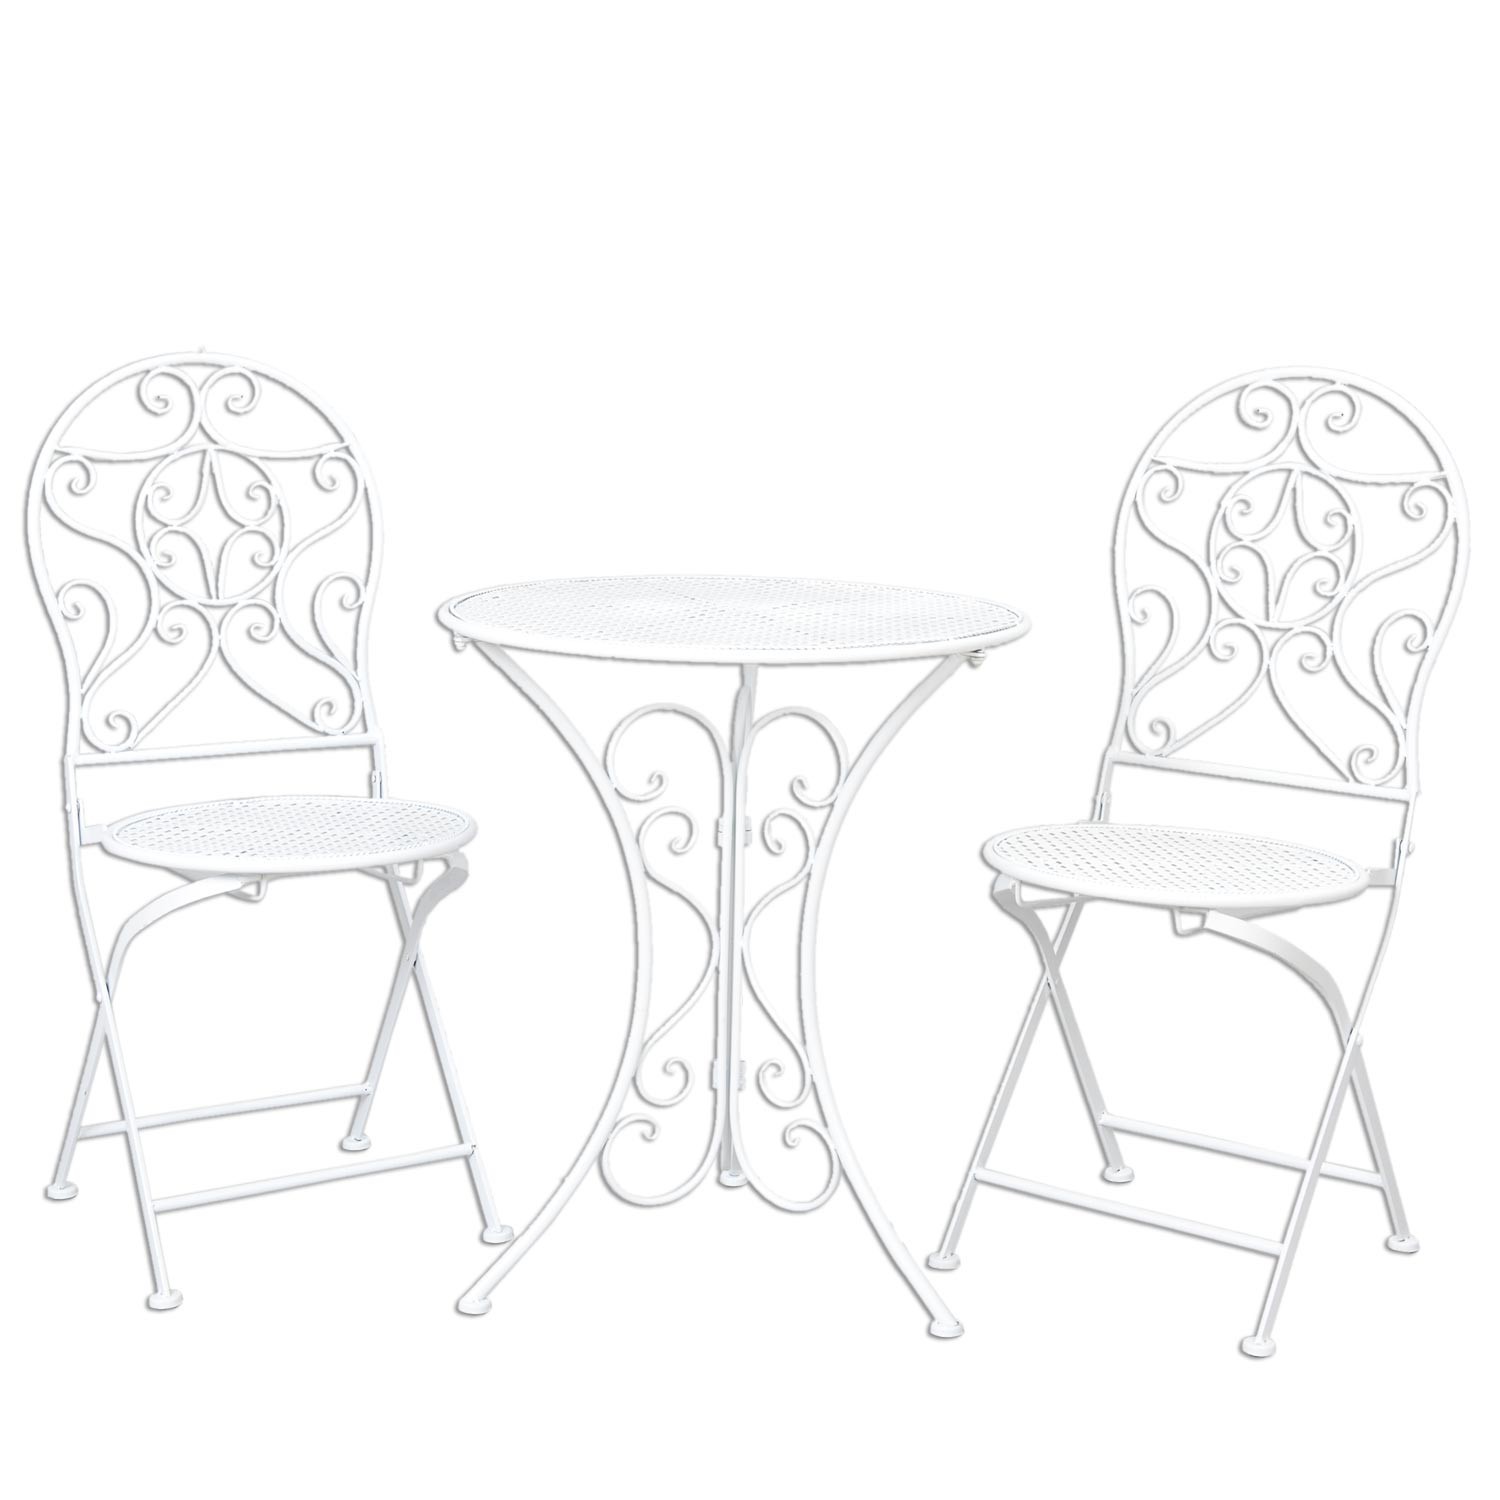 Bílá zahradní skládací souprava - stůl + 2 židle - Ø 60*70 / 2x Ø 40*40*92 cm Clayre & Eef